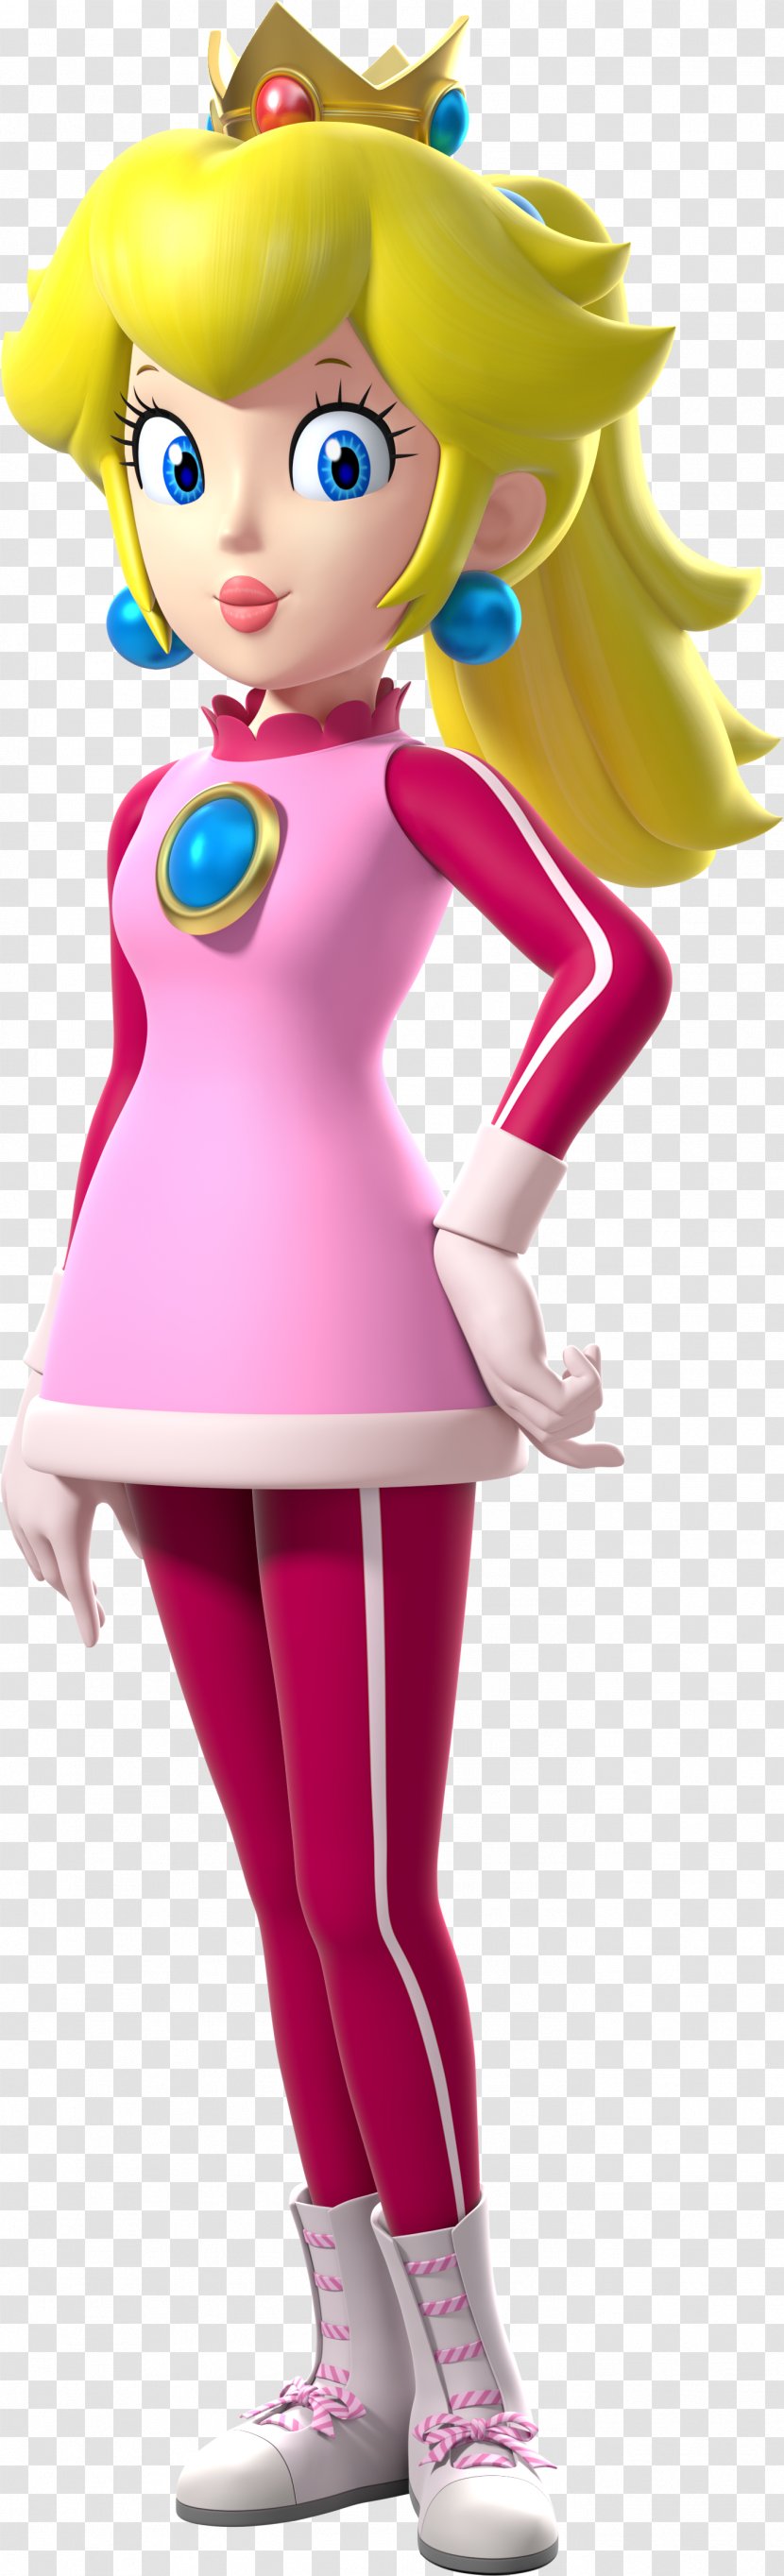 Clip Art Illustration Pink M Figurine Mascot - Smile - Princess Peach Transparent PNG